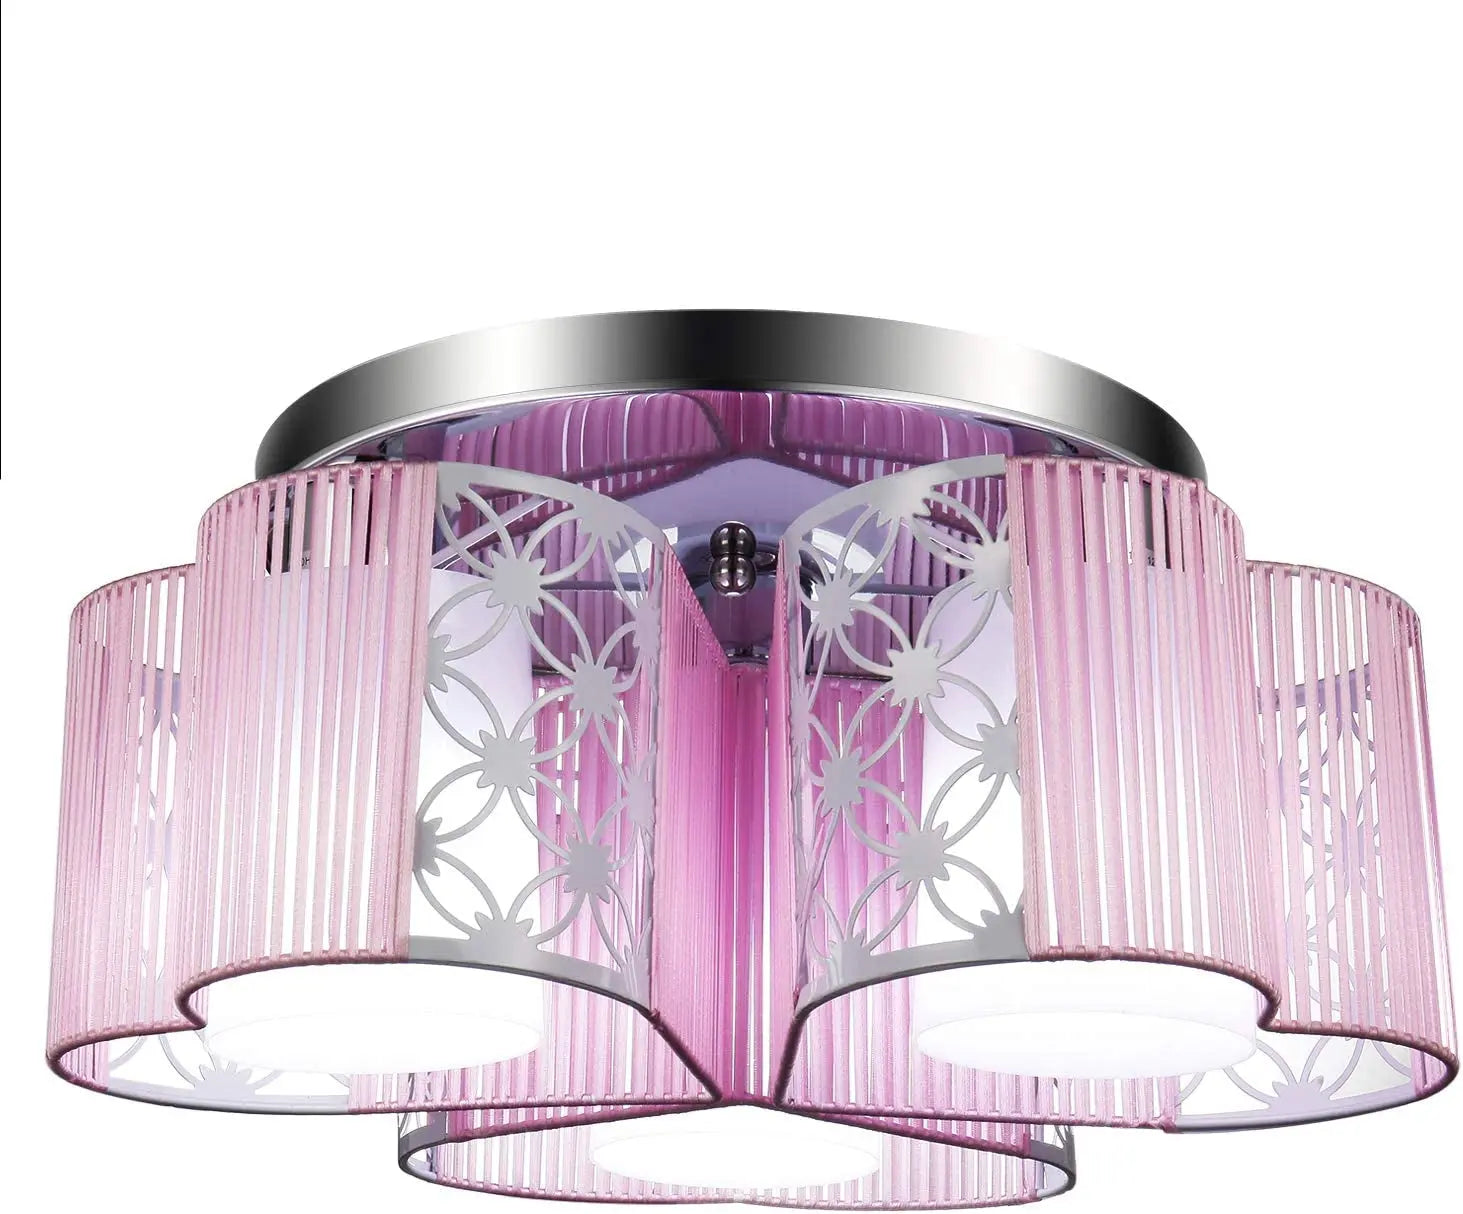 Modern Pink Chandelier Girls Room Flush Mount Ceiling Light Fixtures Heart-Shaped 3-Light Pink Ceiling Lamp for Bedroom Living Room